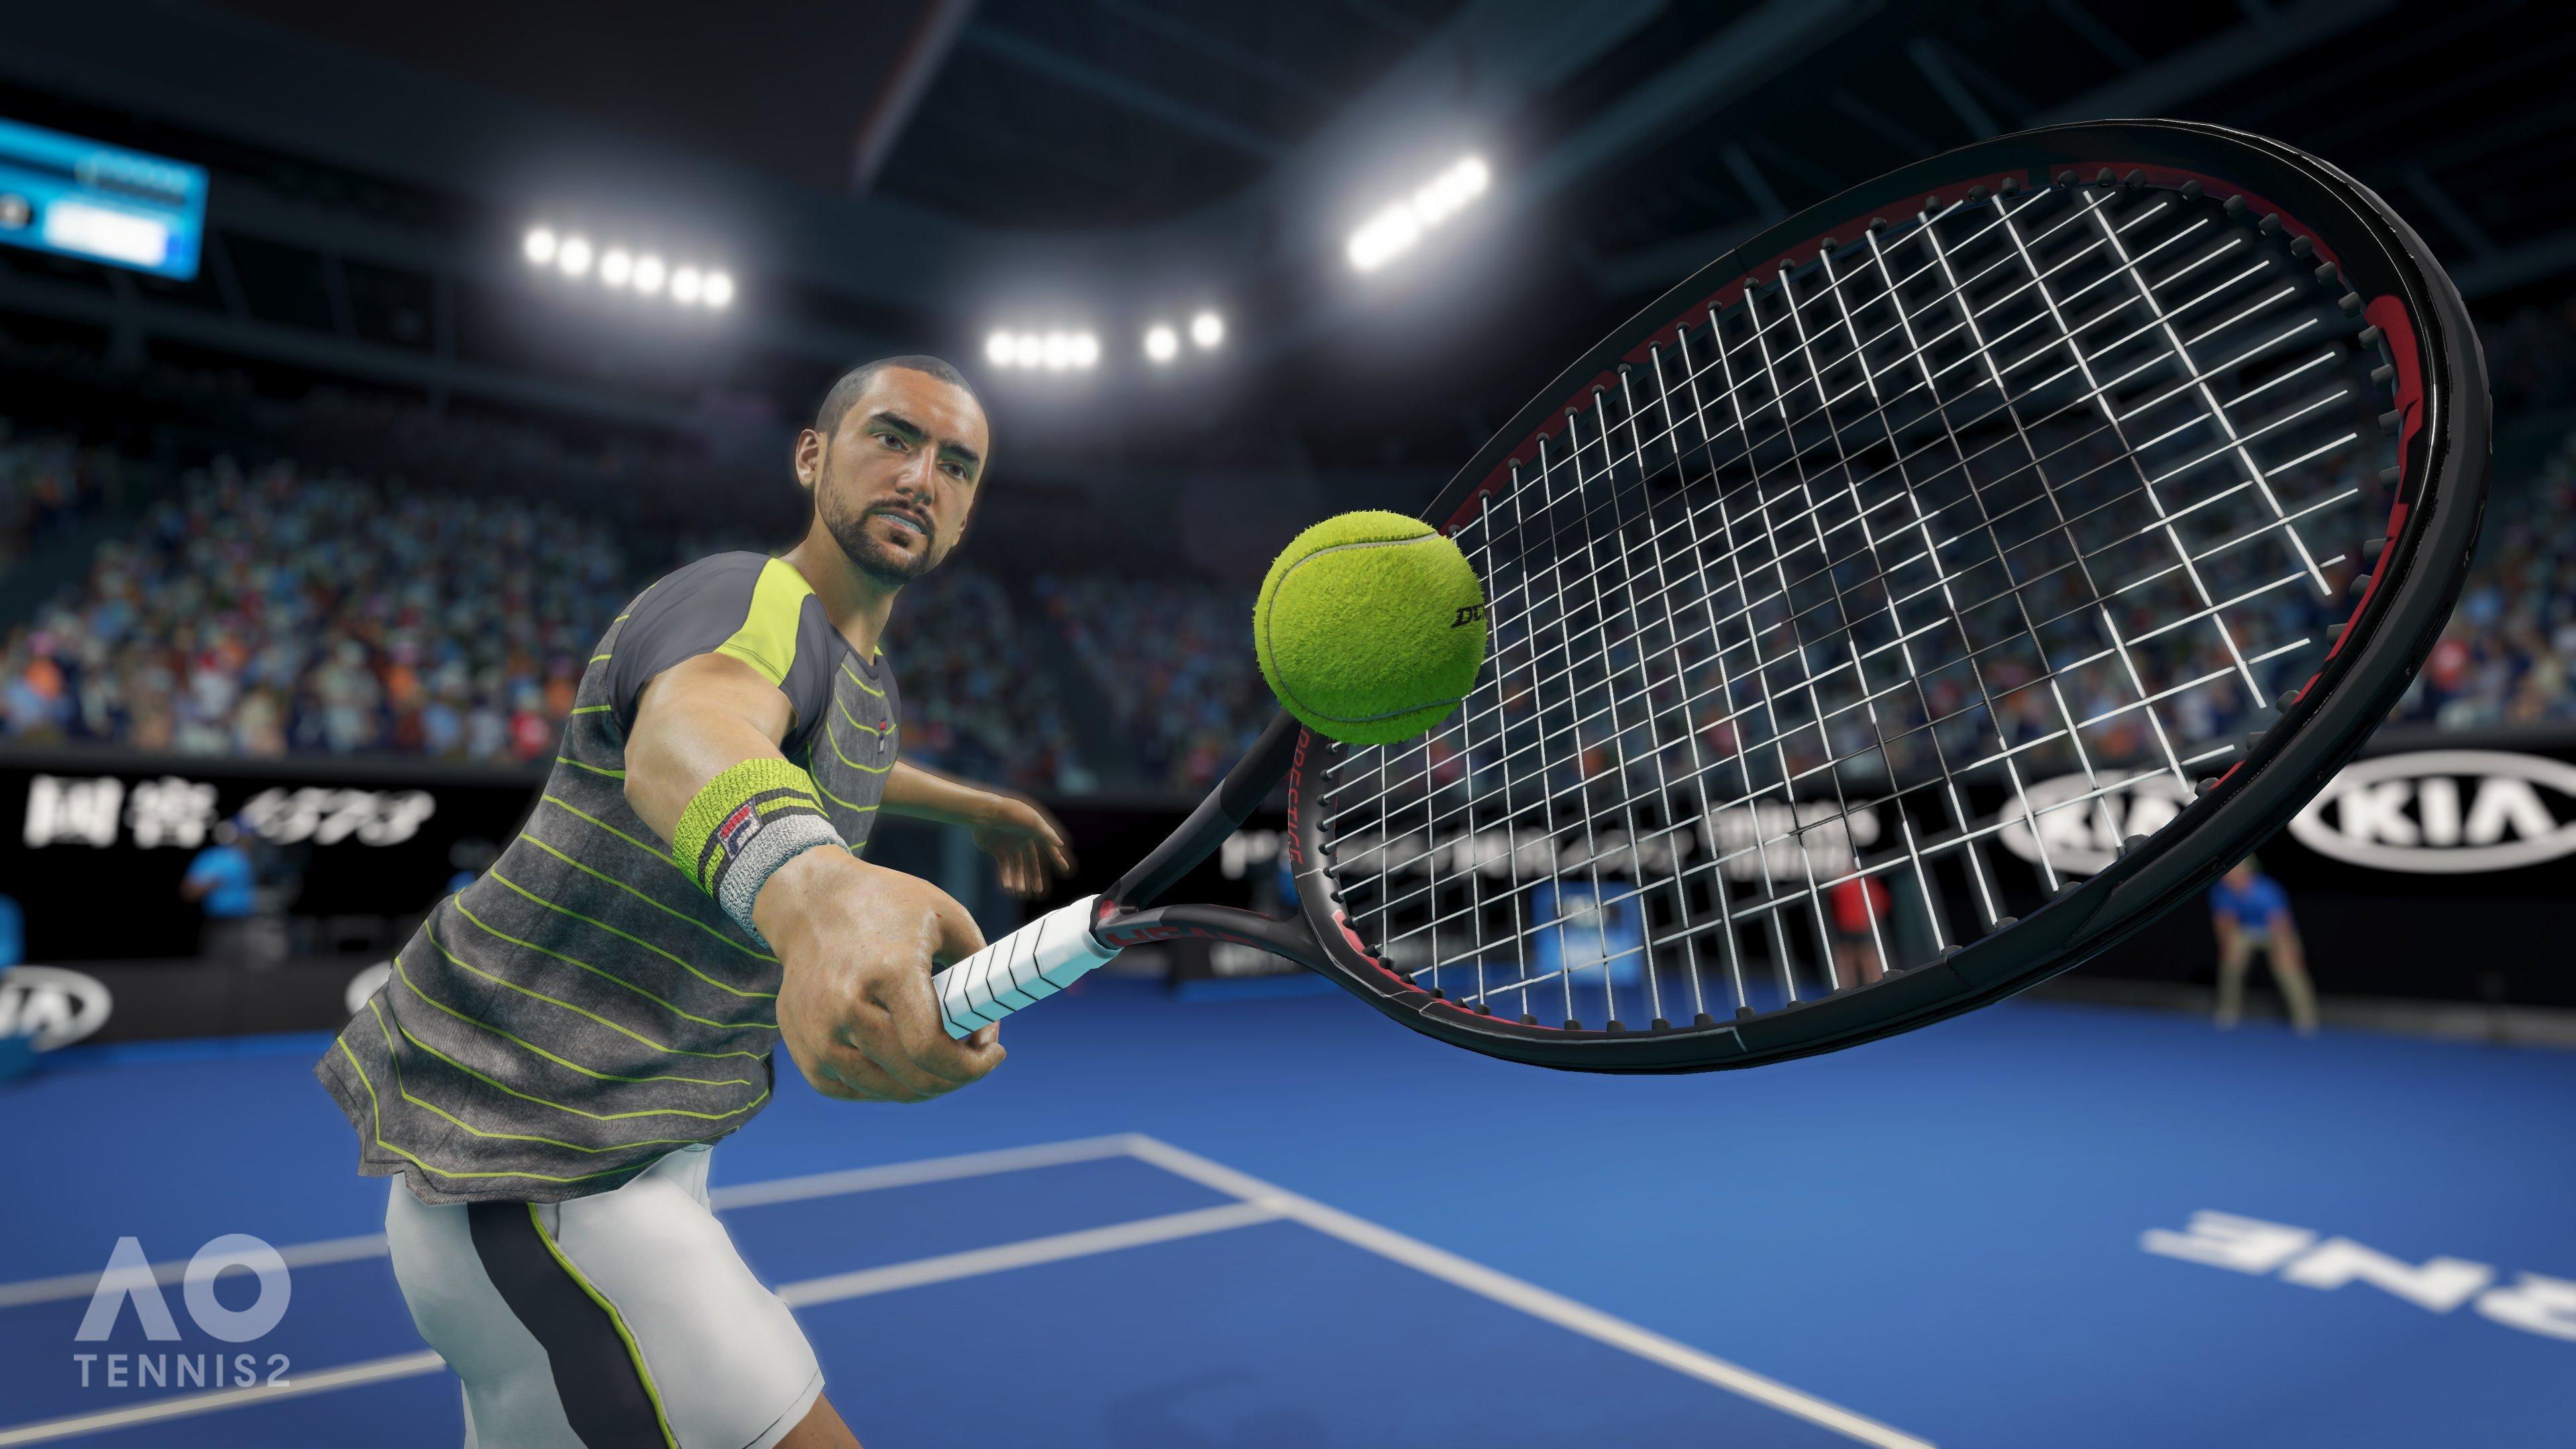 AO Tennis 2 - PlayStation 4